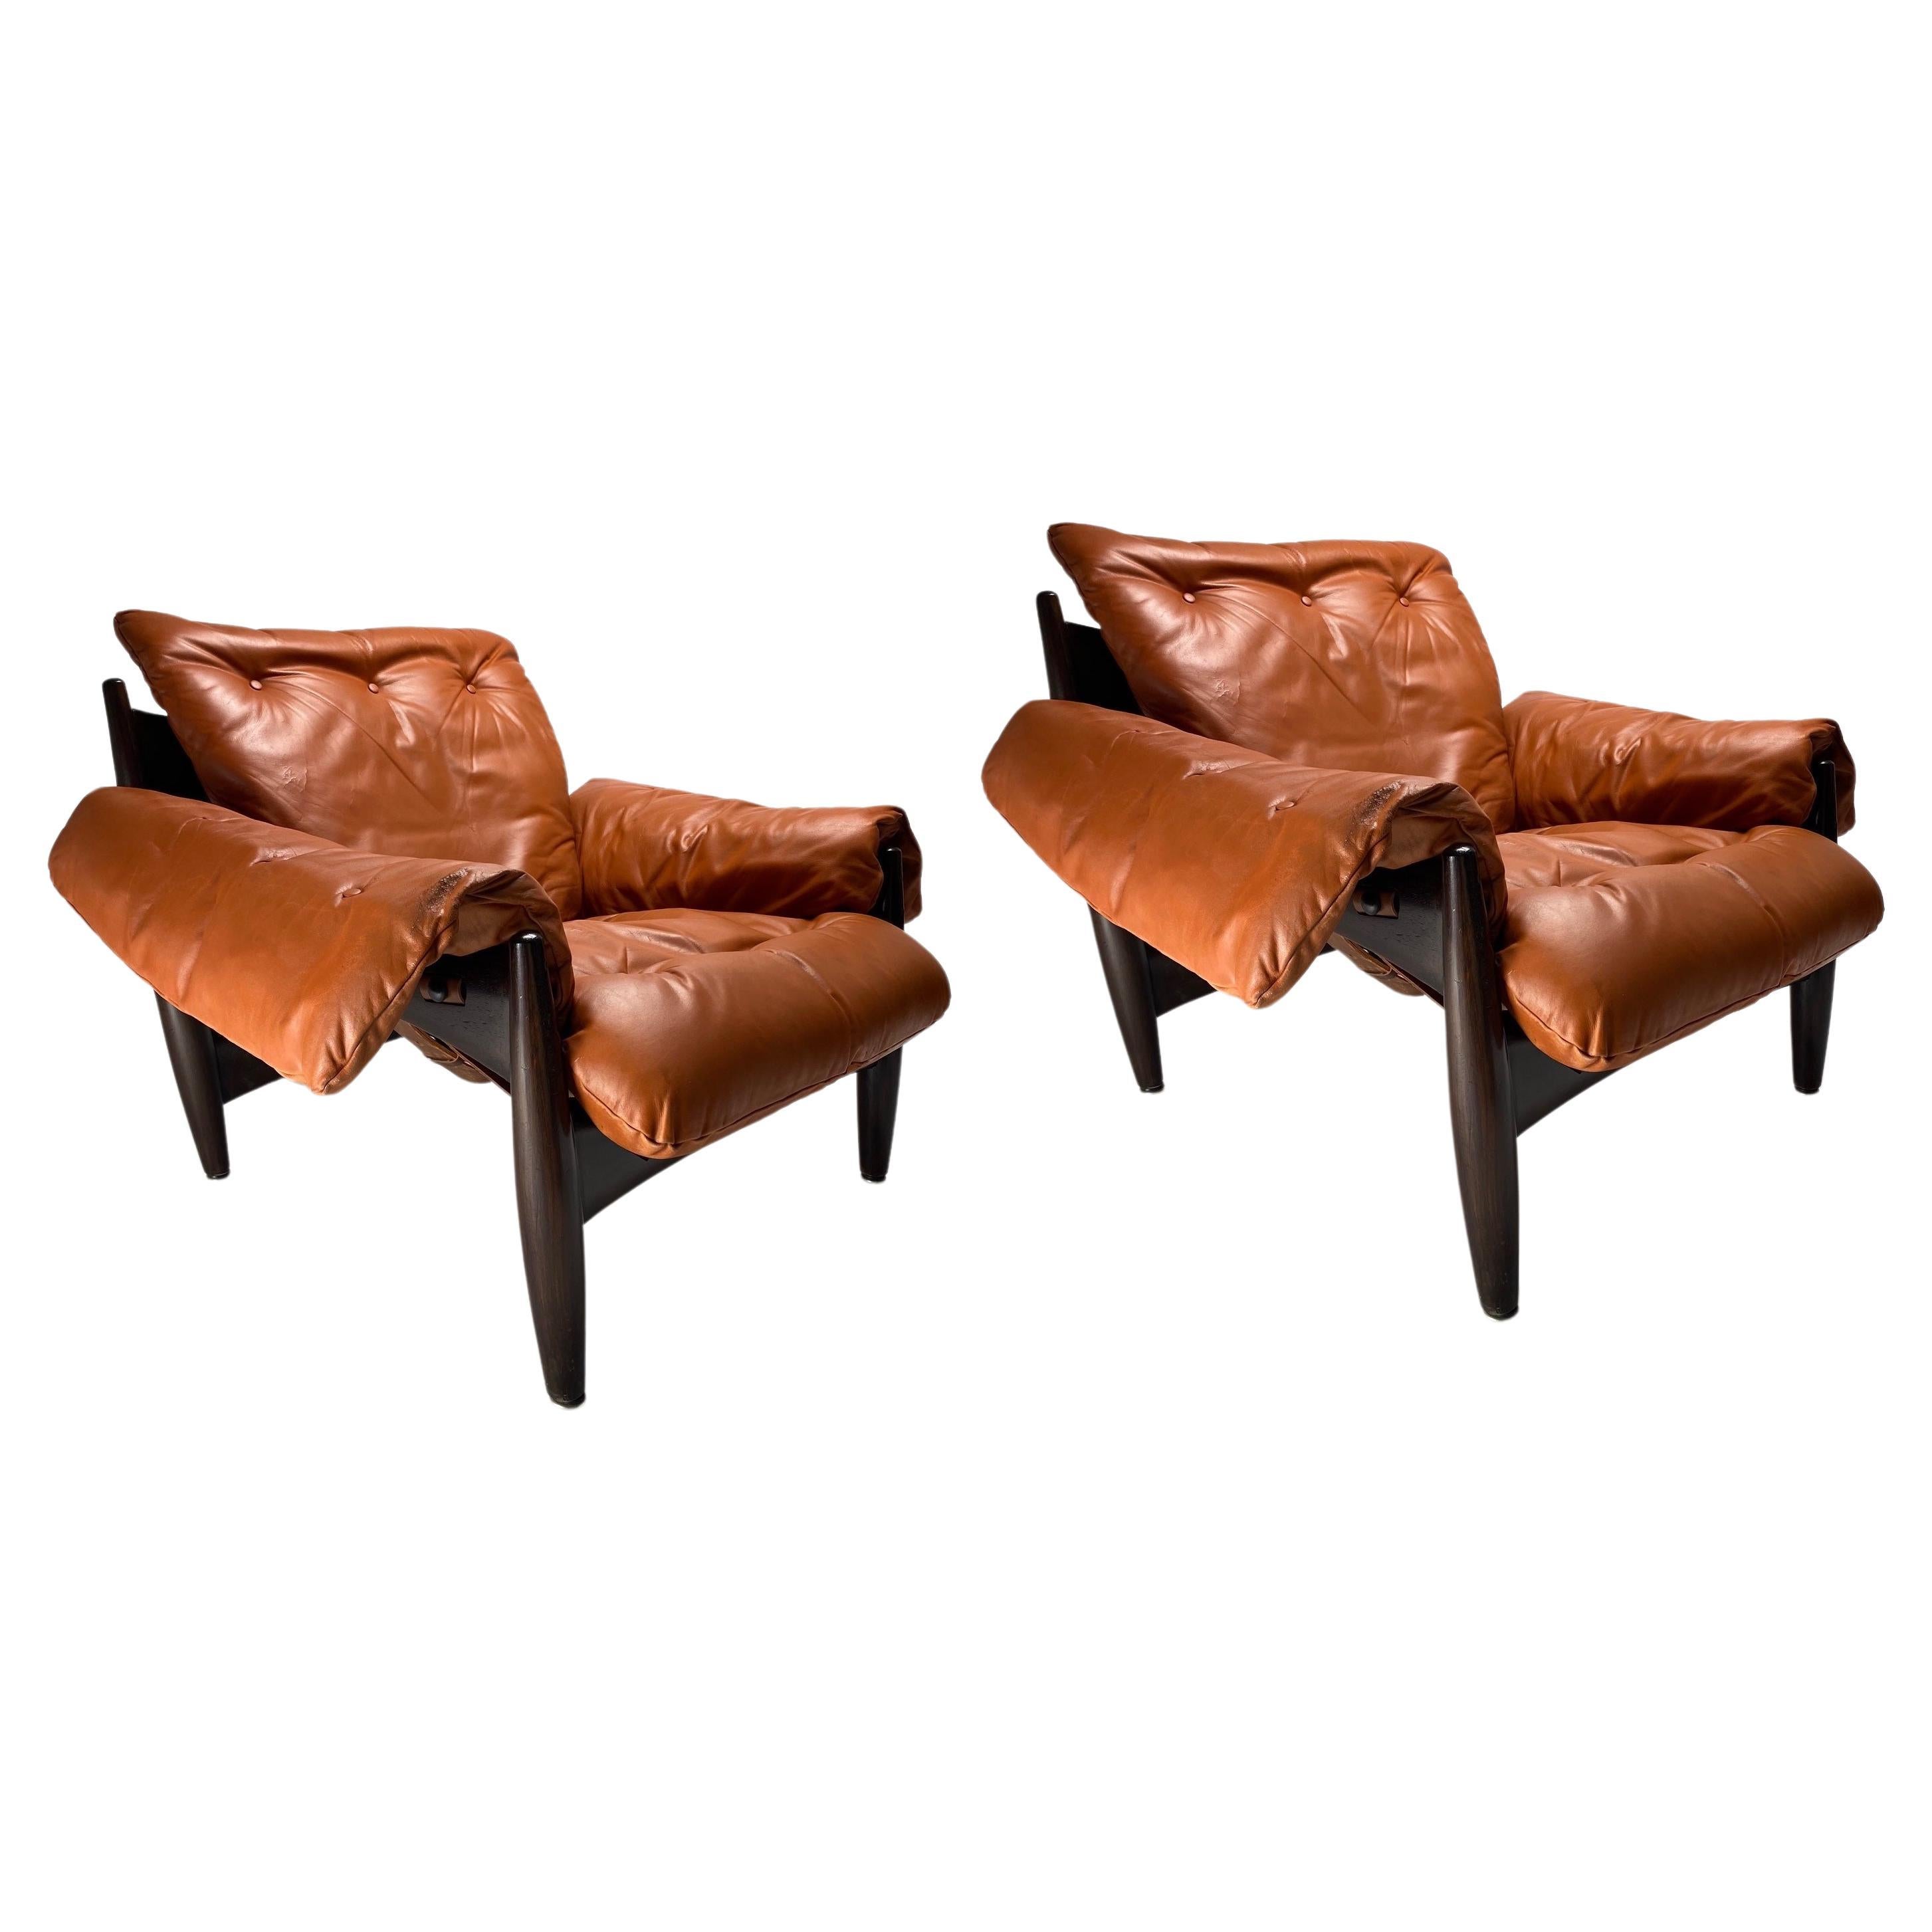 Midcentury Modern Sergio Rodrigues "Sheriff" Lounge Chairs, Brazil